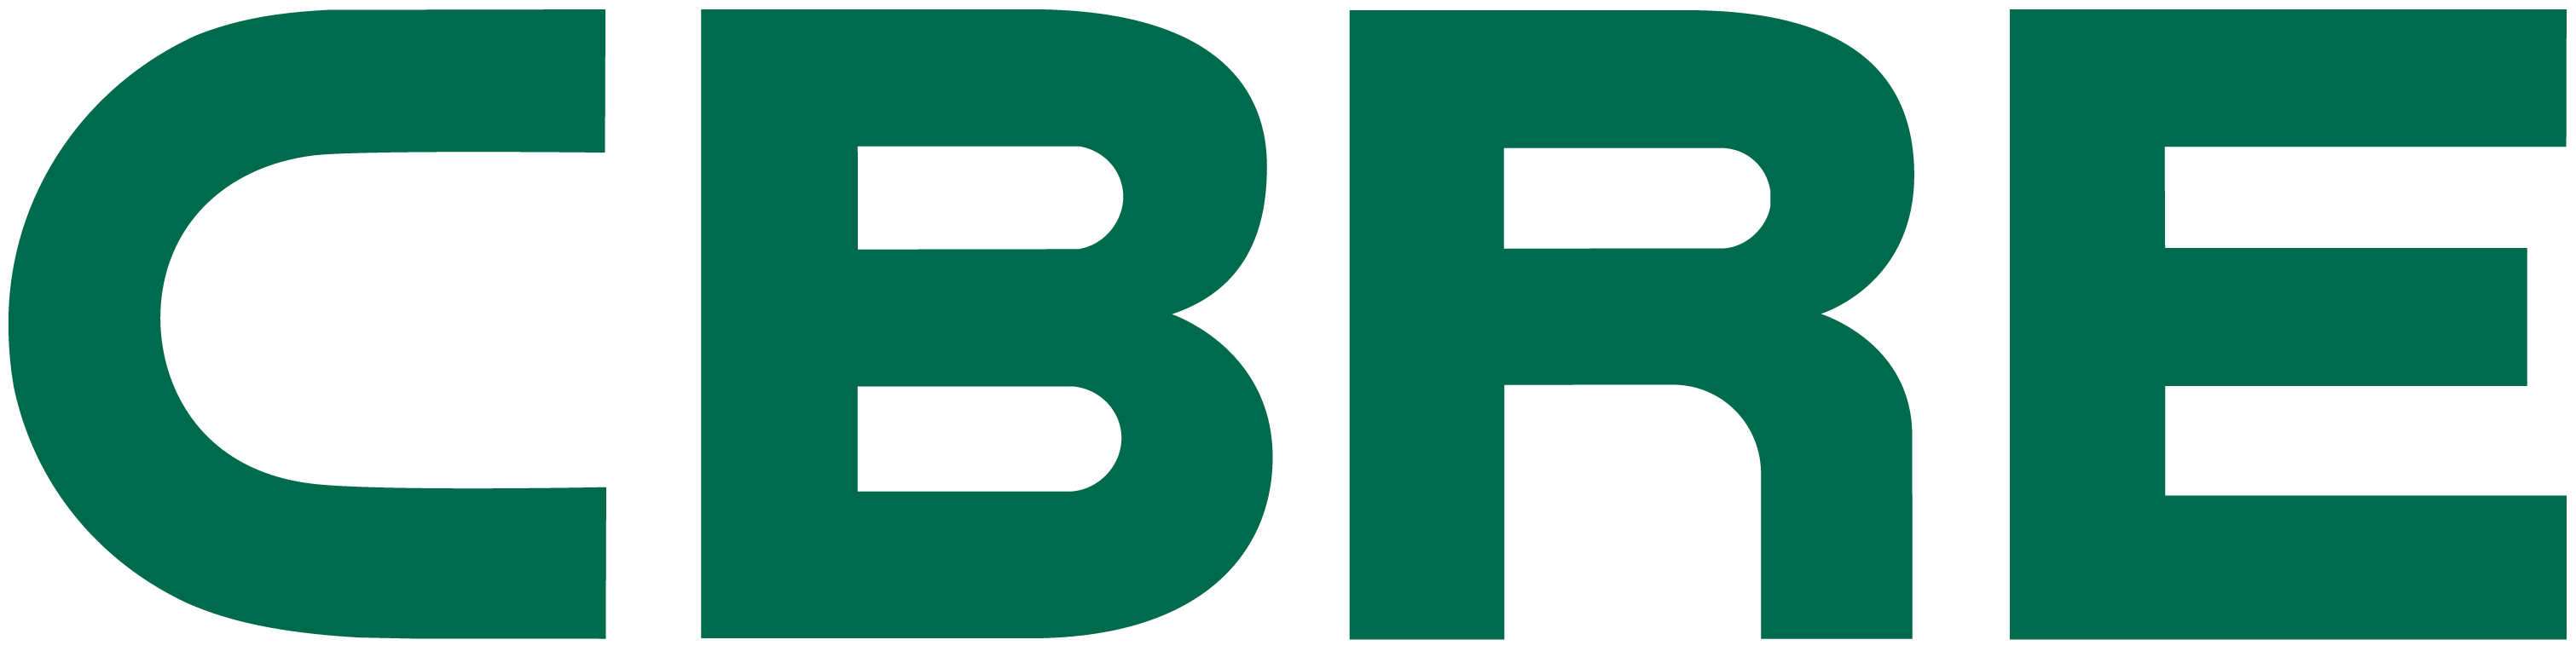 Company logo for Cbre Pte. Ltd.